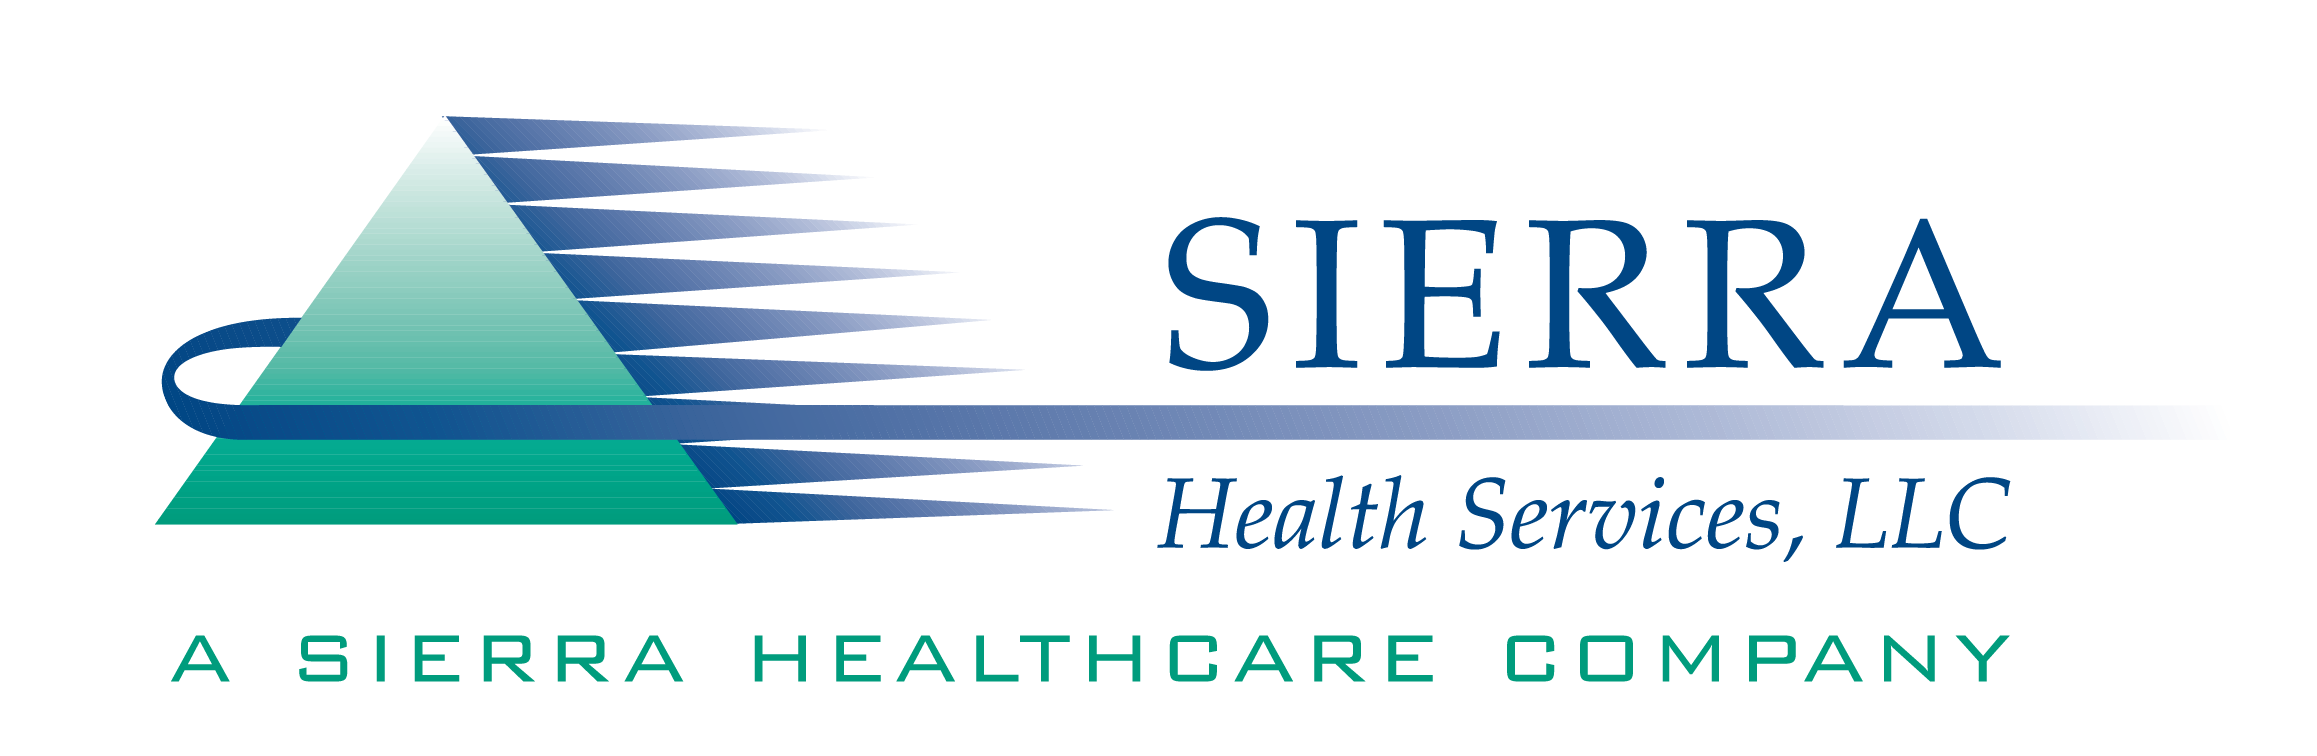 Sierra Health Services, LLC Logo